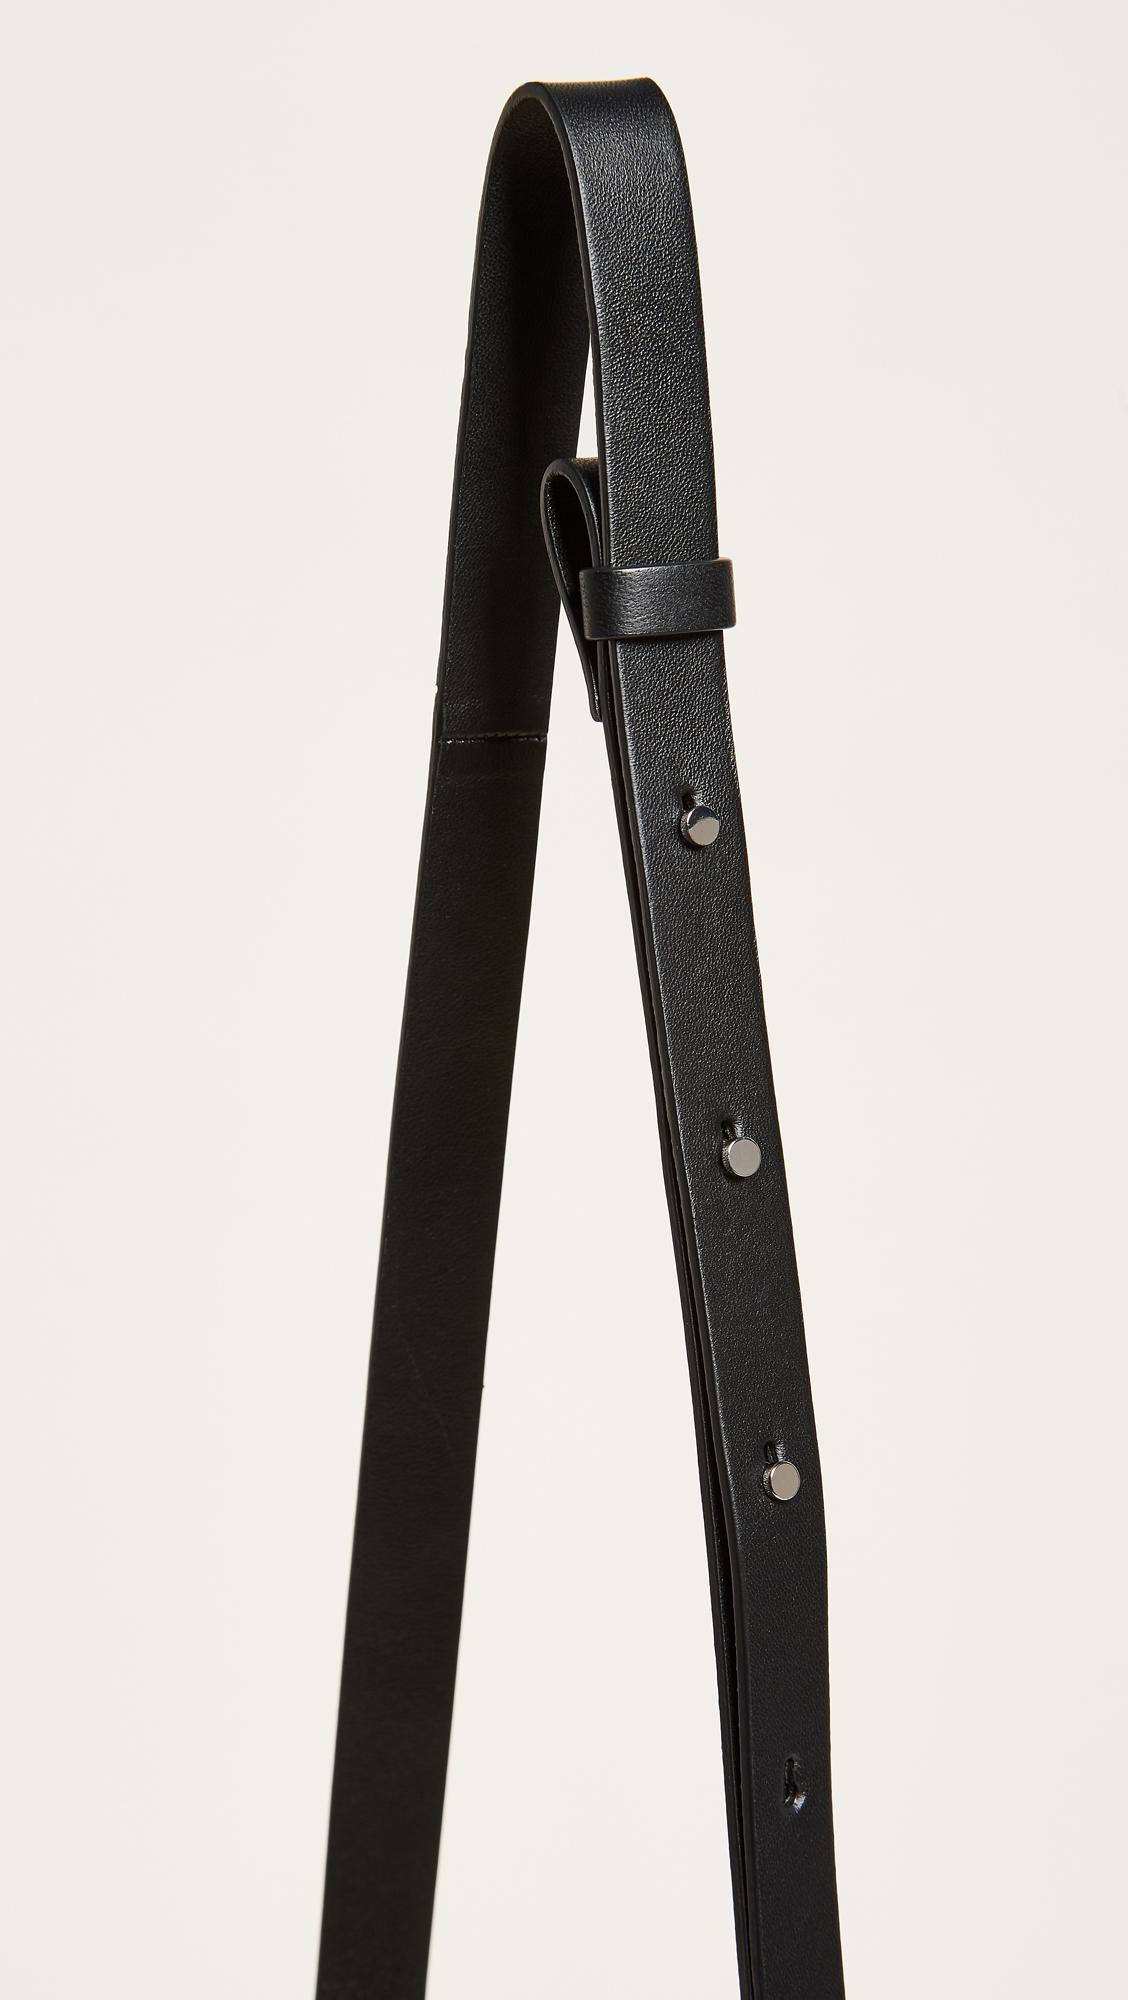 Mini sac leather crossbody bag Aesther Ekme Black in Leather - 29822947